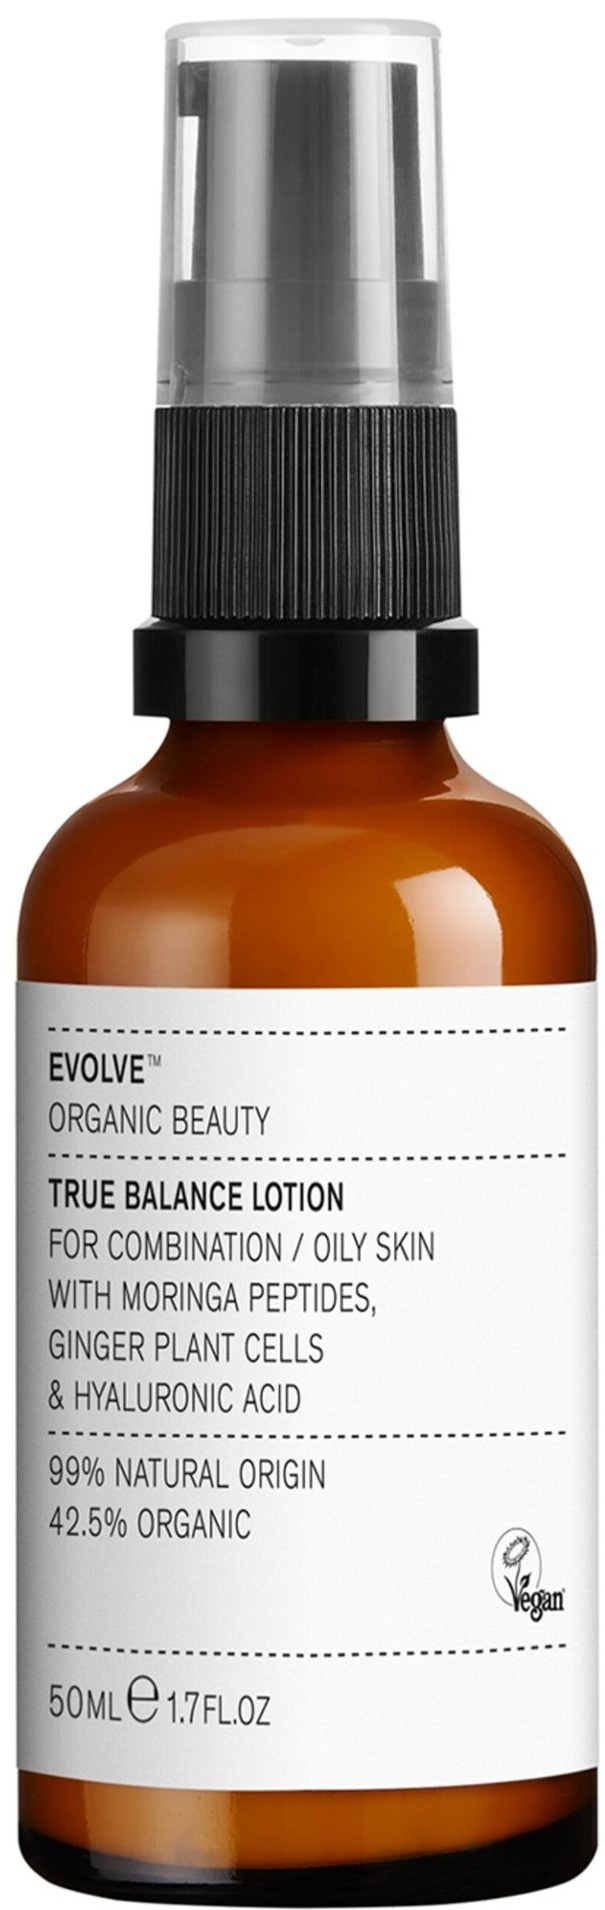 Evolve Organic Beauty True Balance Lotion